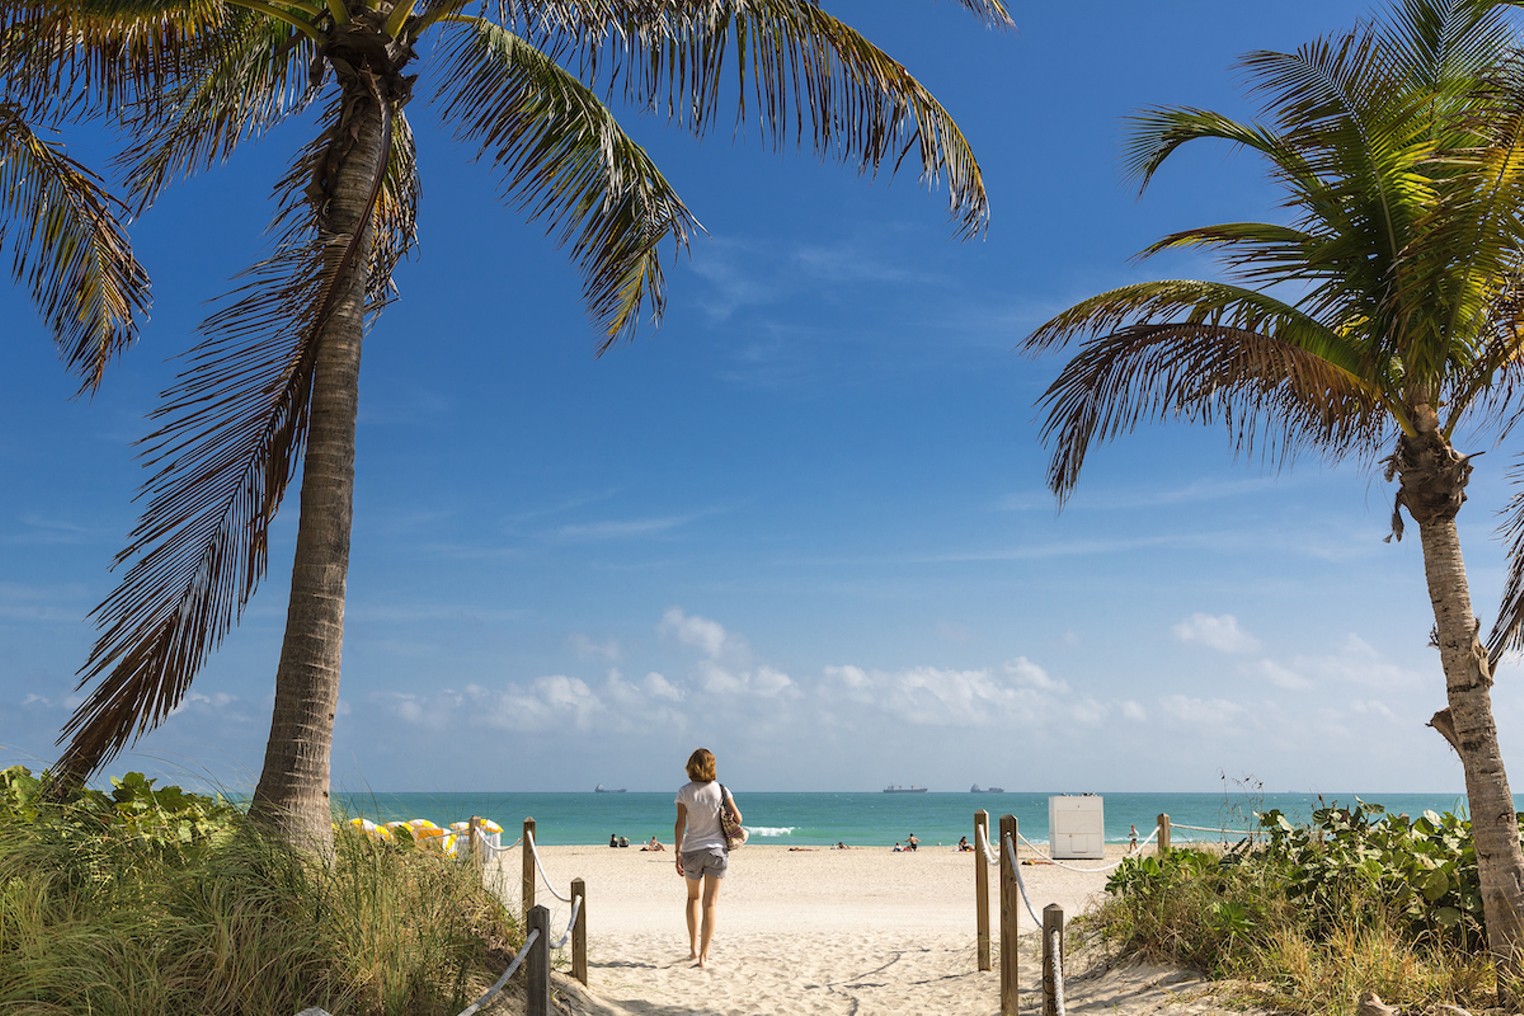 10 Best Beaches in Miami Miami New Times pic